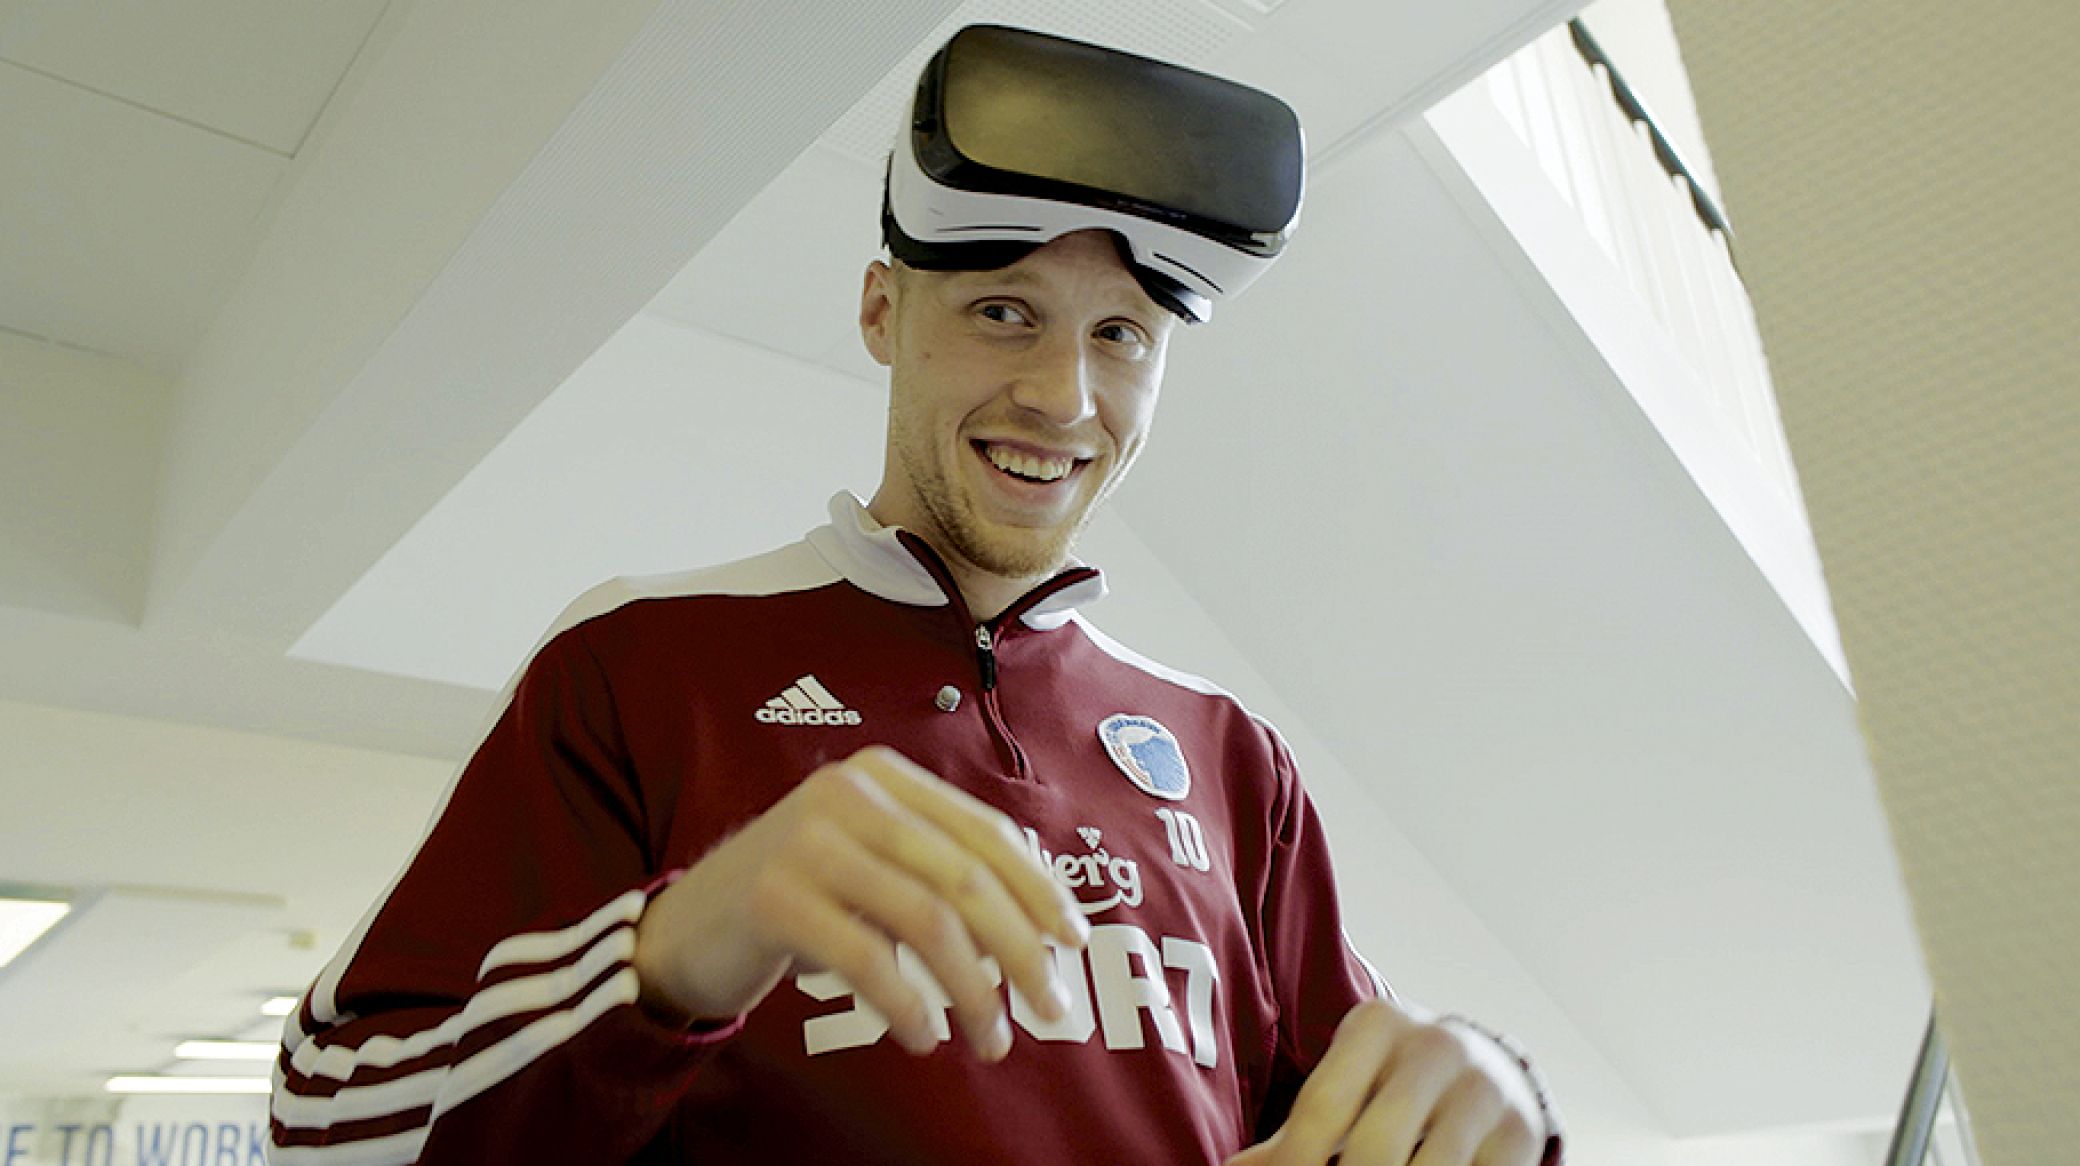 Oplev derbysejren i Virtual Reality i Fanshoppen på søndag